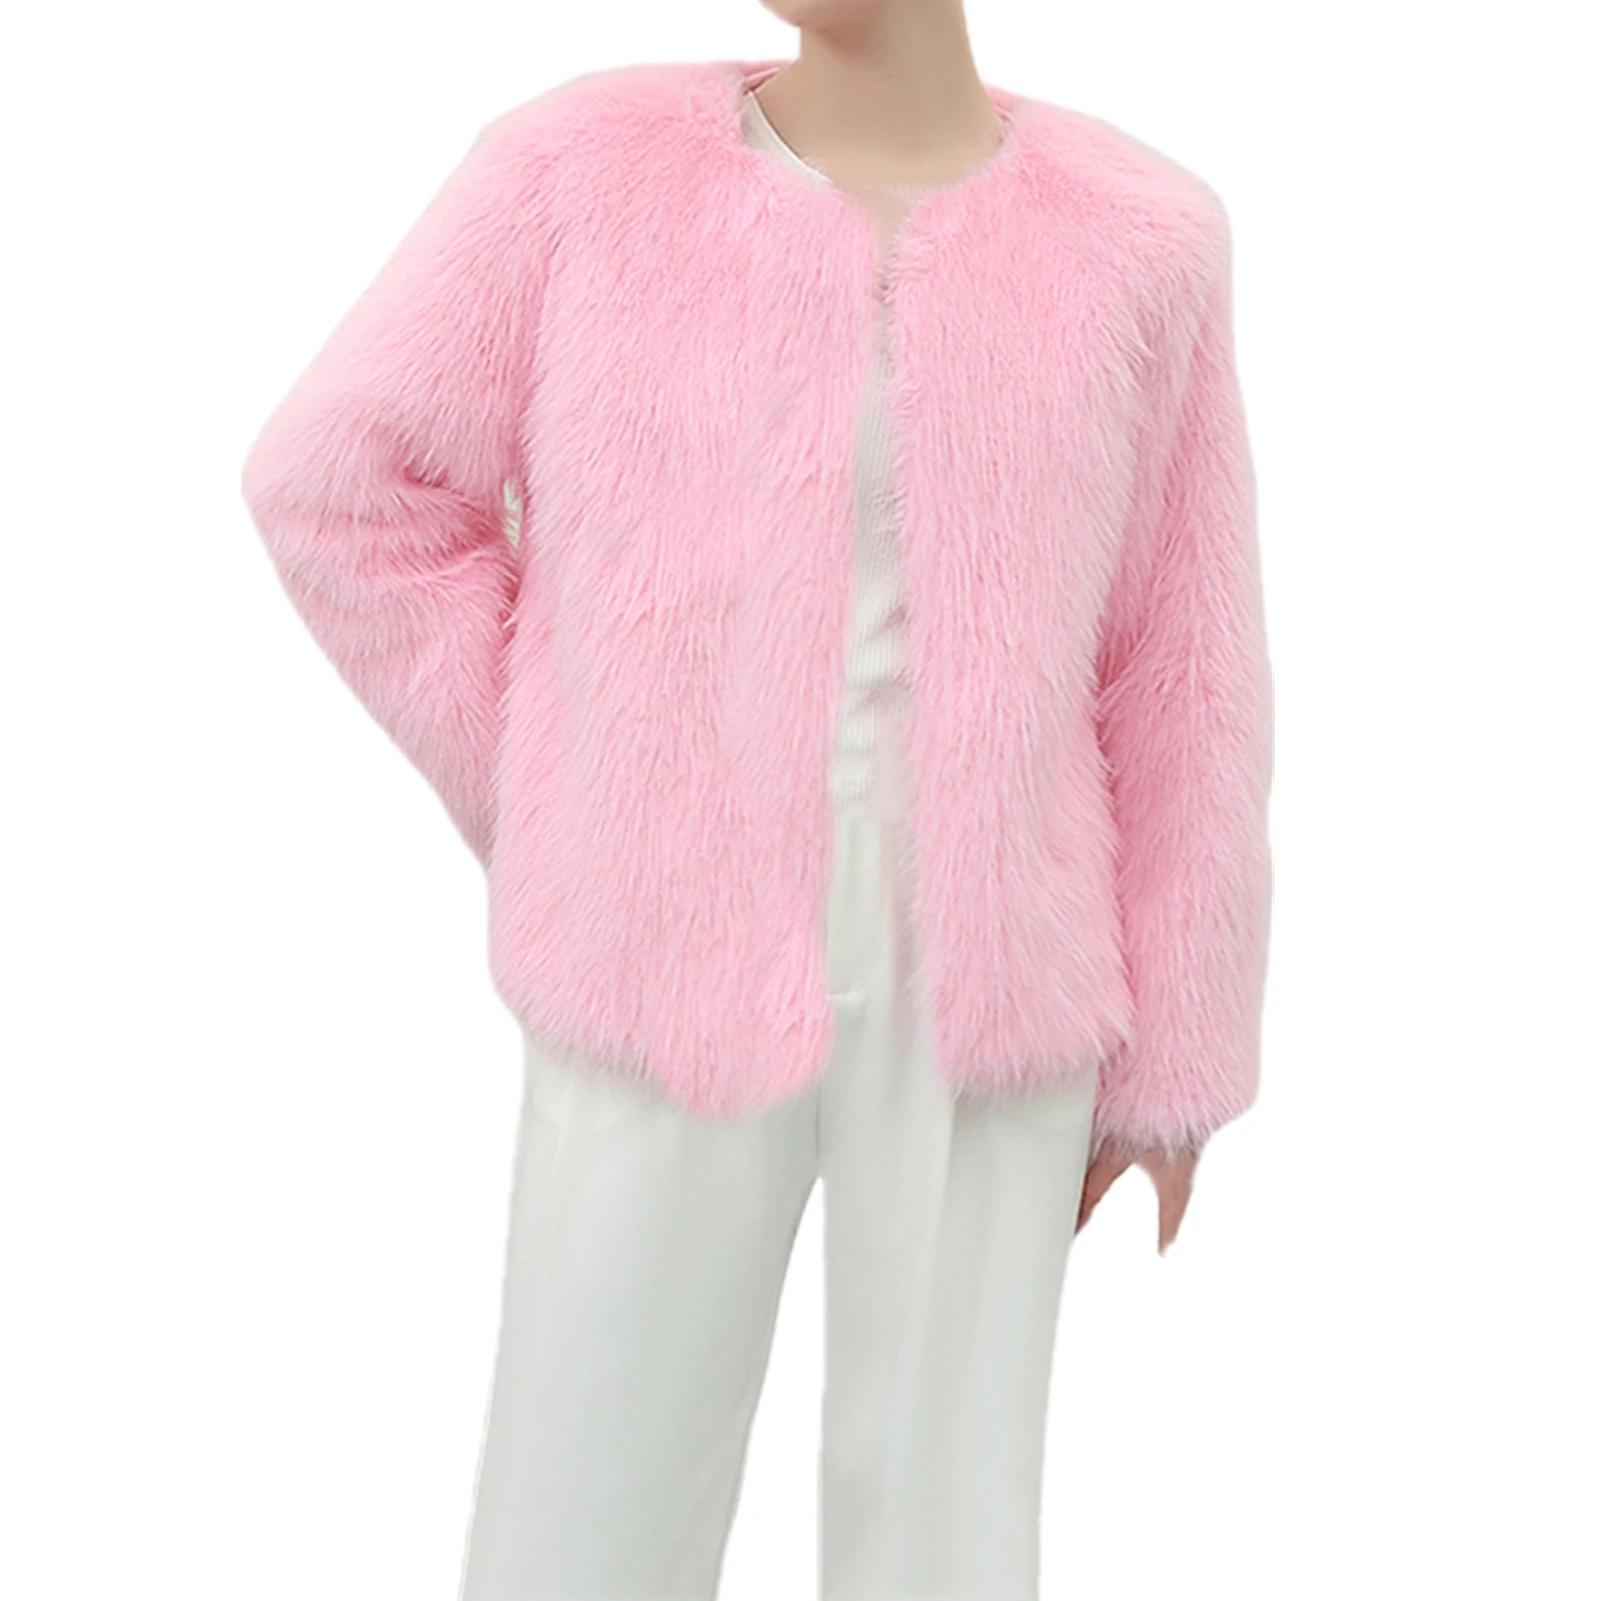 Winter Fashion Women Long Sleeve Faux Fur Coat Female Elegant Fluffy Thick Warm Artificial Fox Fur Jacket Outerwear